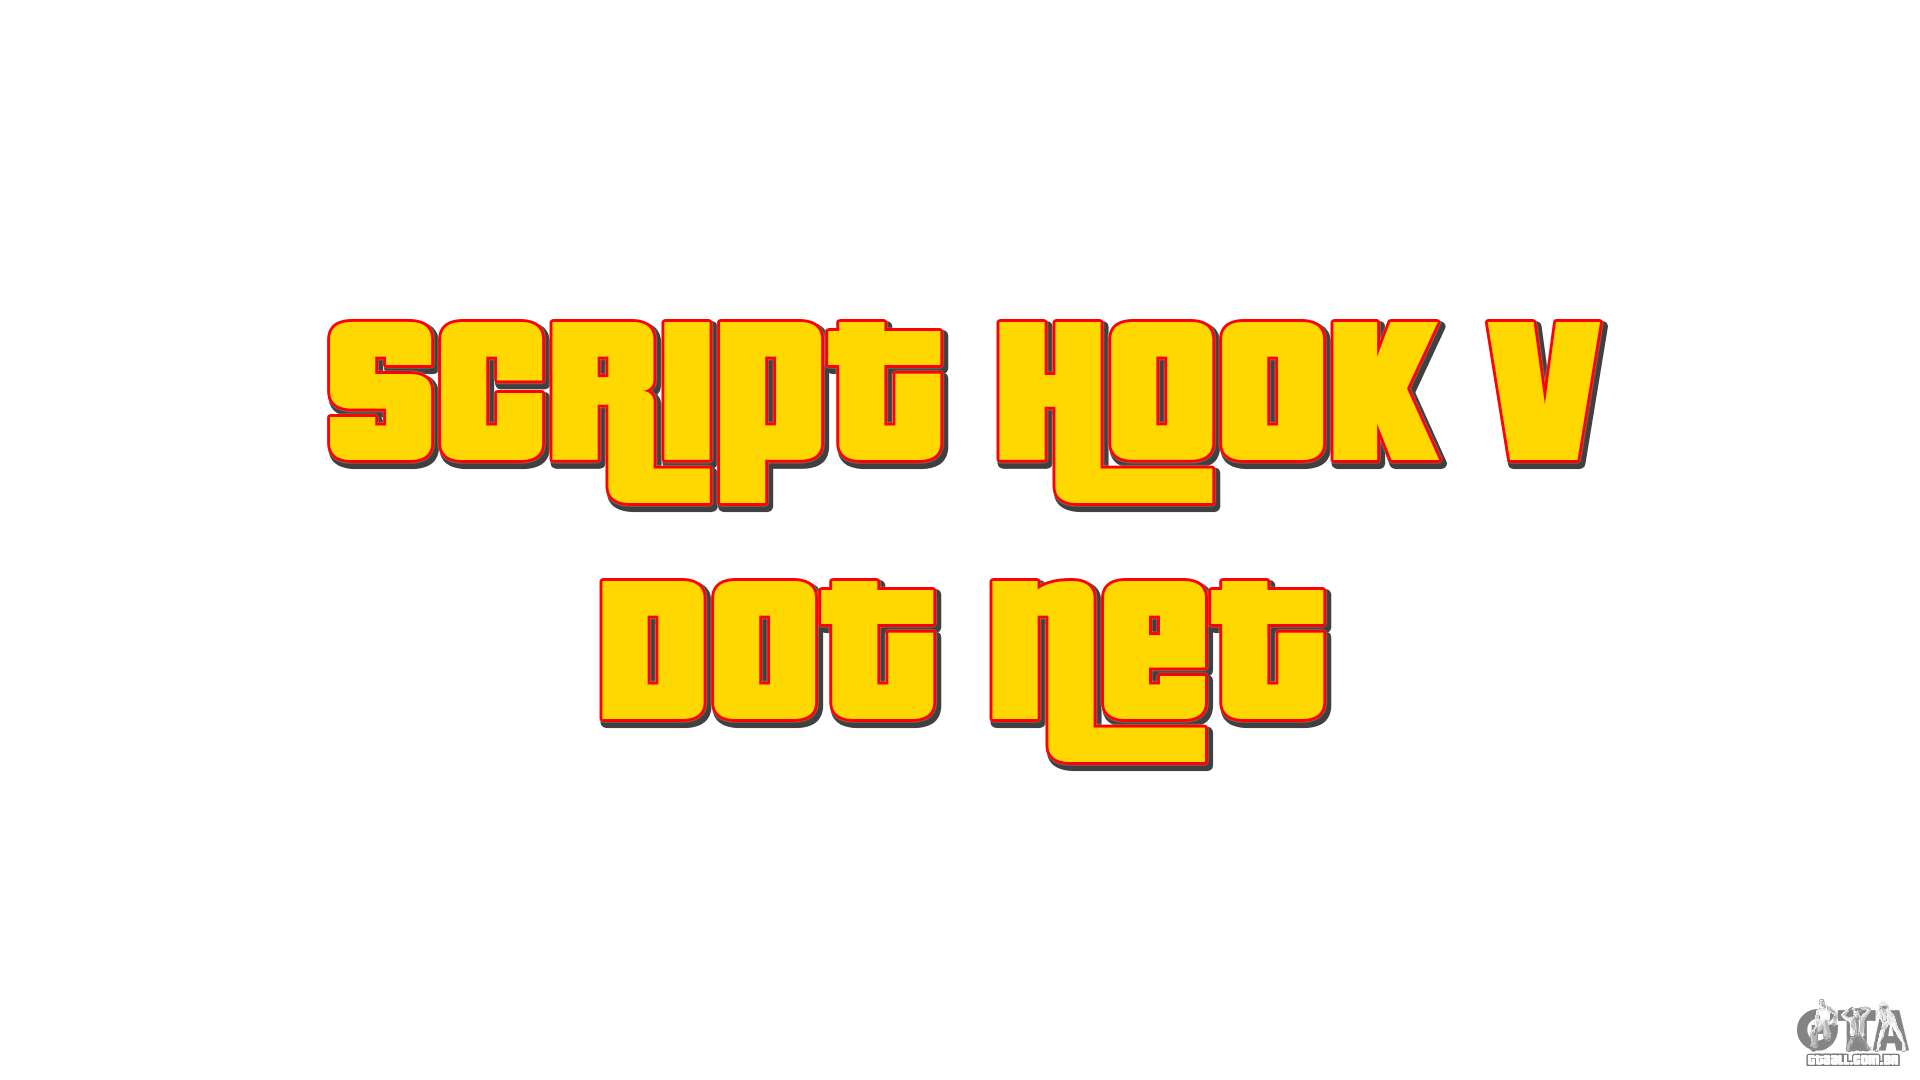 script hook v not working